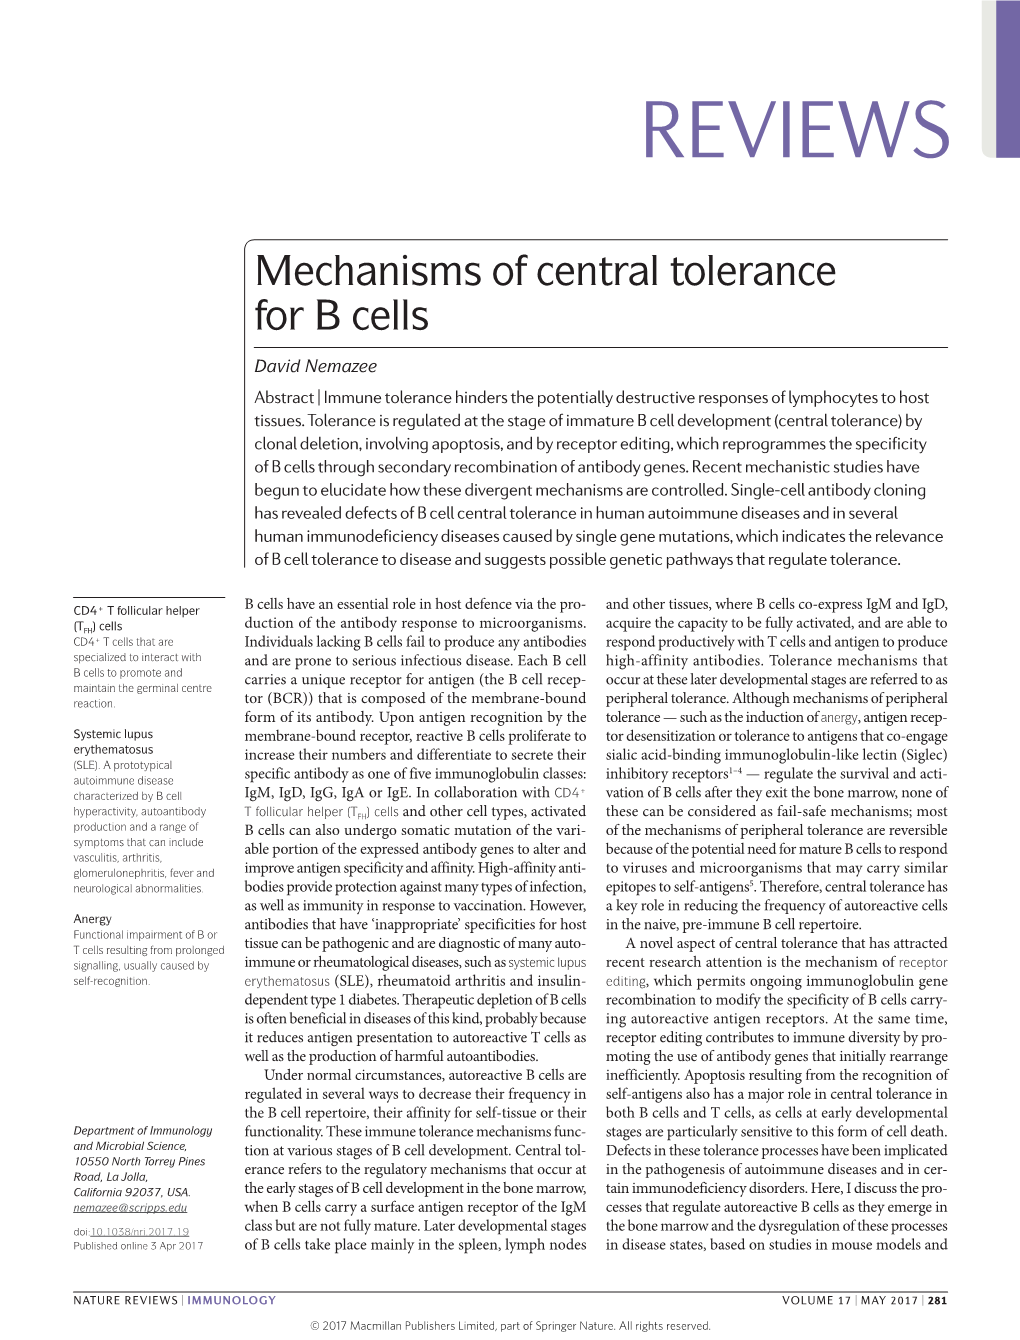 Mechanisms of Central Tolerance for B Cells